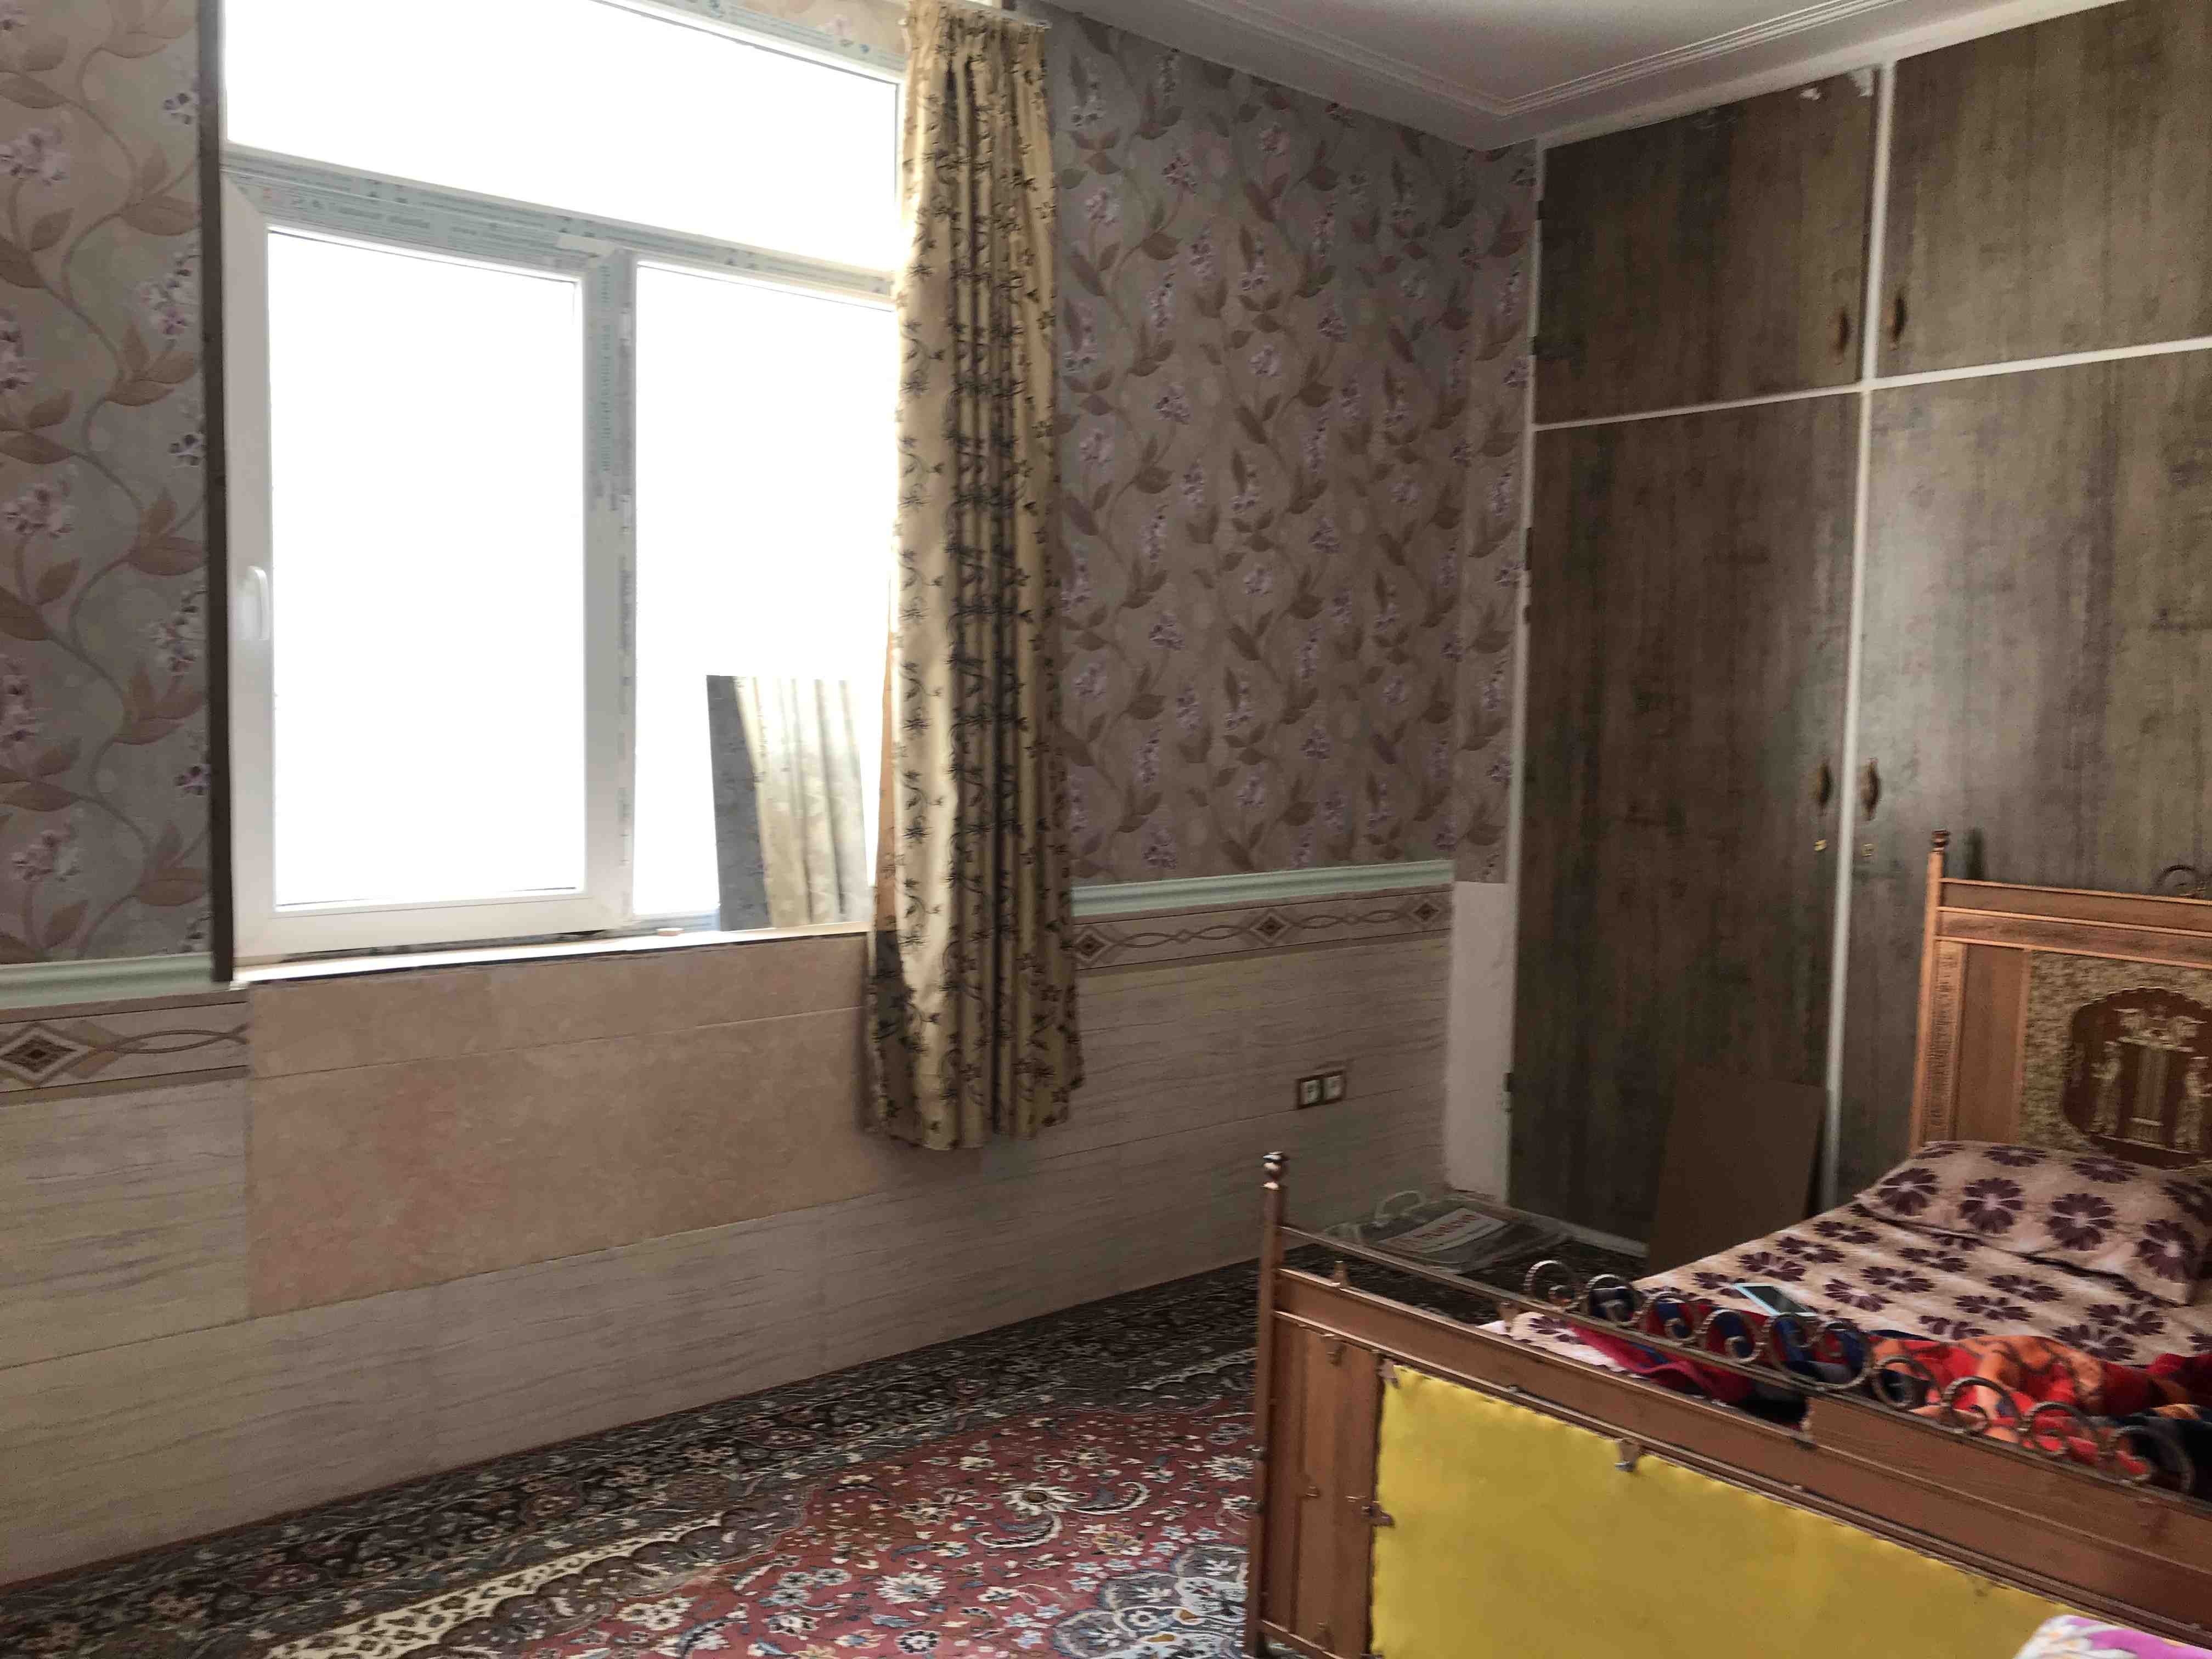 townee اجاره منزل ویلایی ارزان در عدالت شیراز 